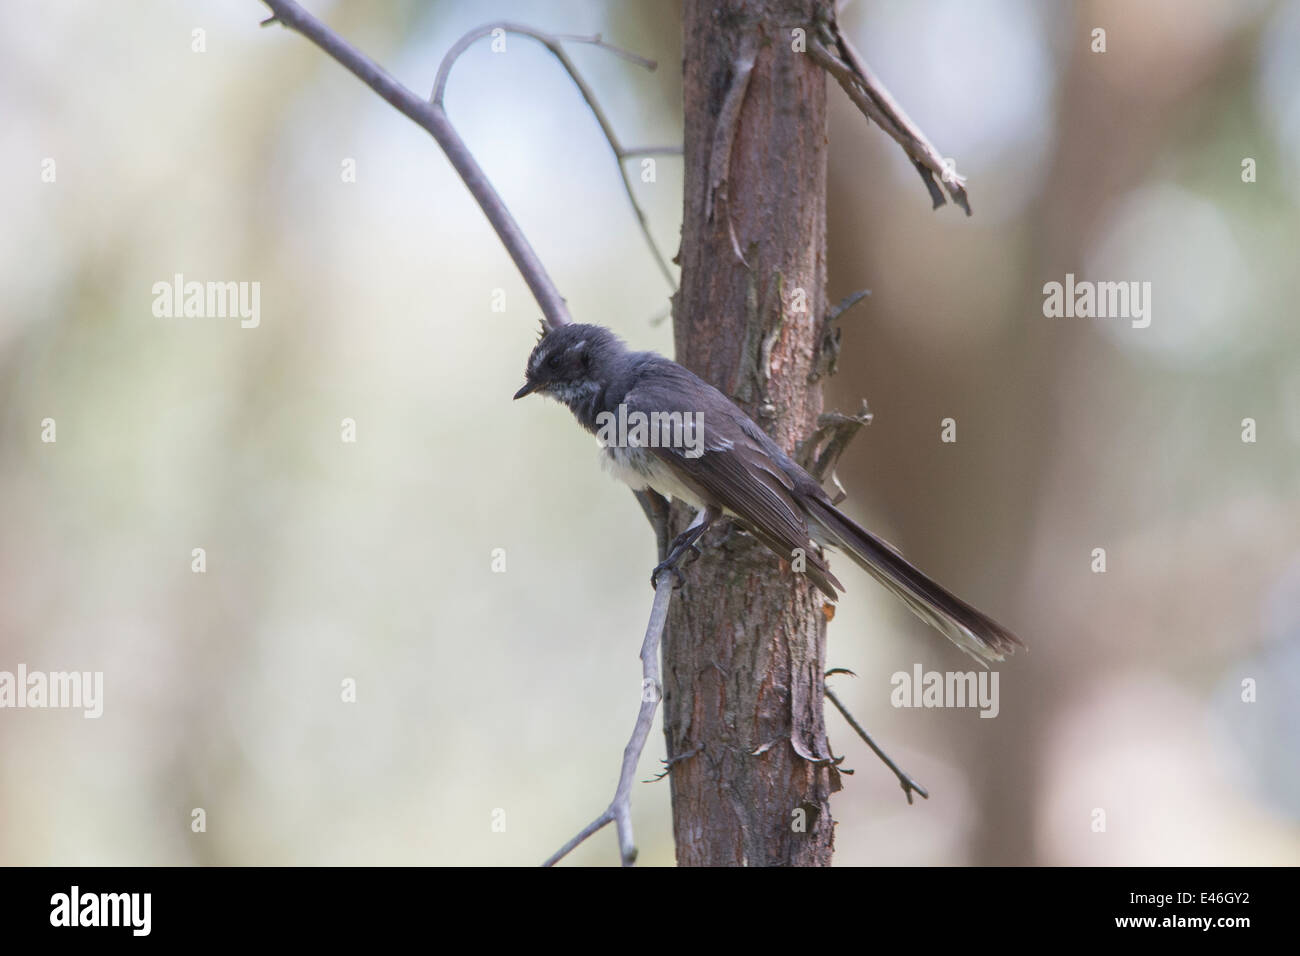 rare australian bird in tree closeup portrait Stock Photo